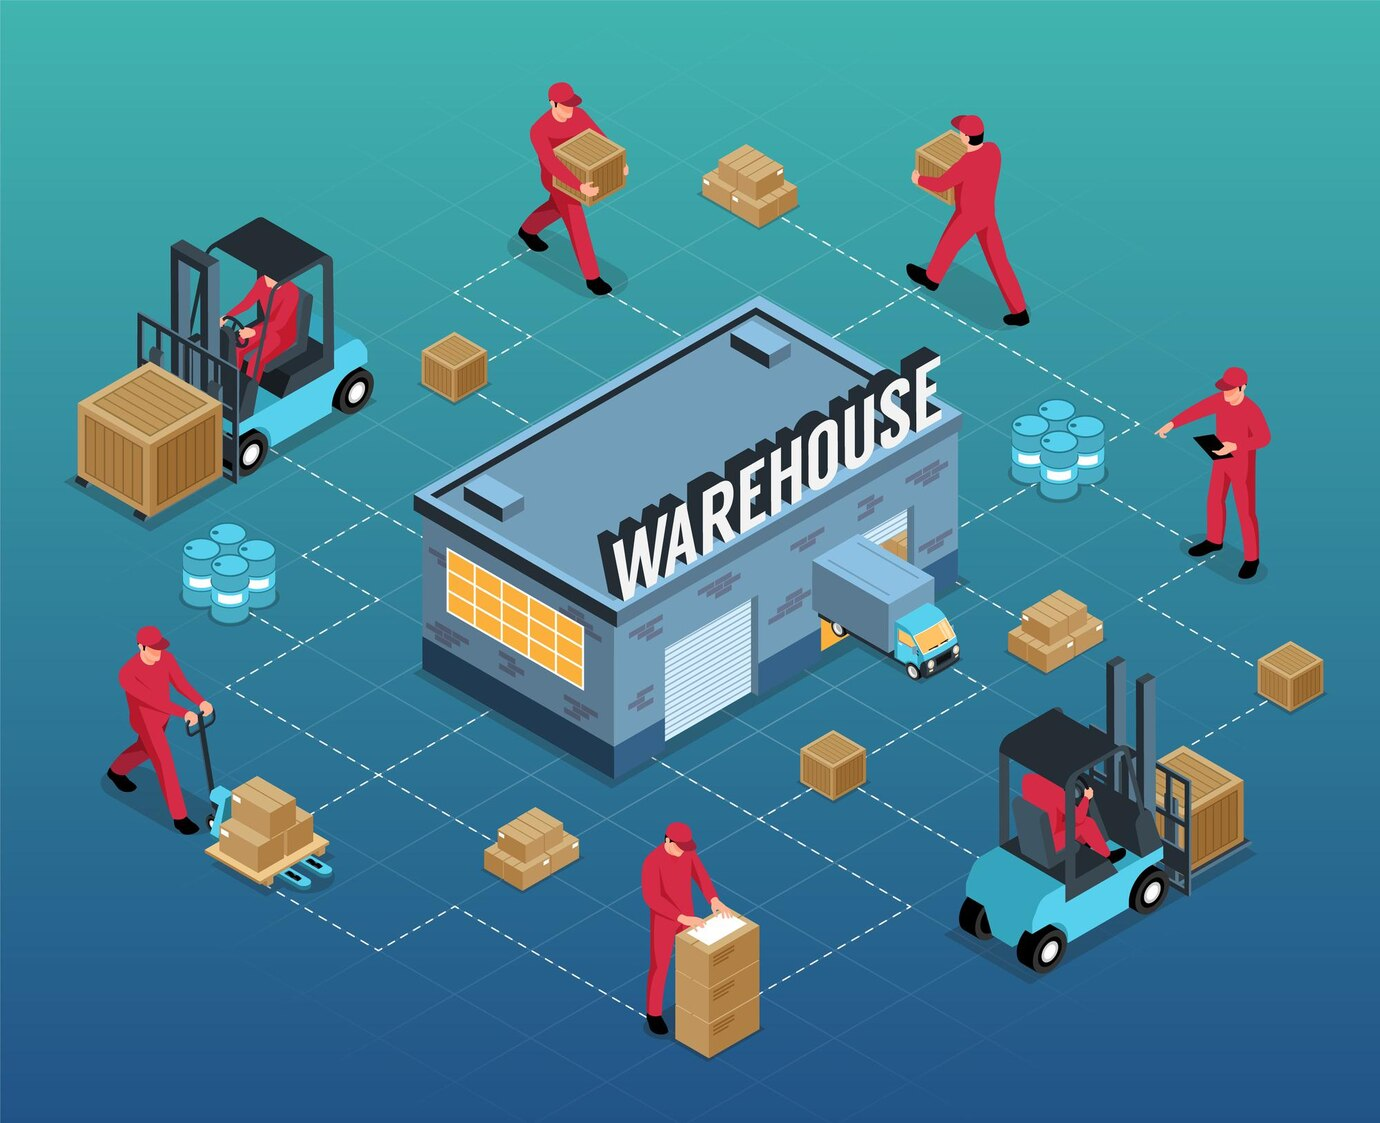 Warehouse management apps